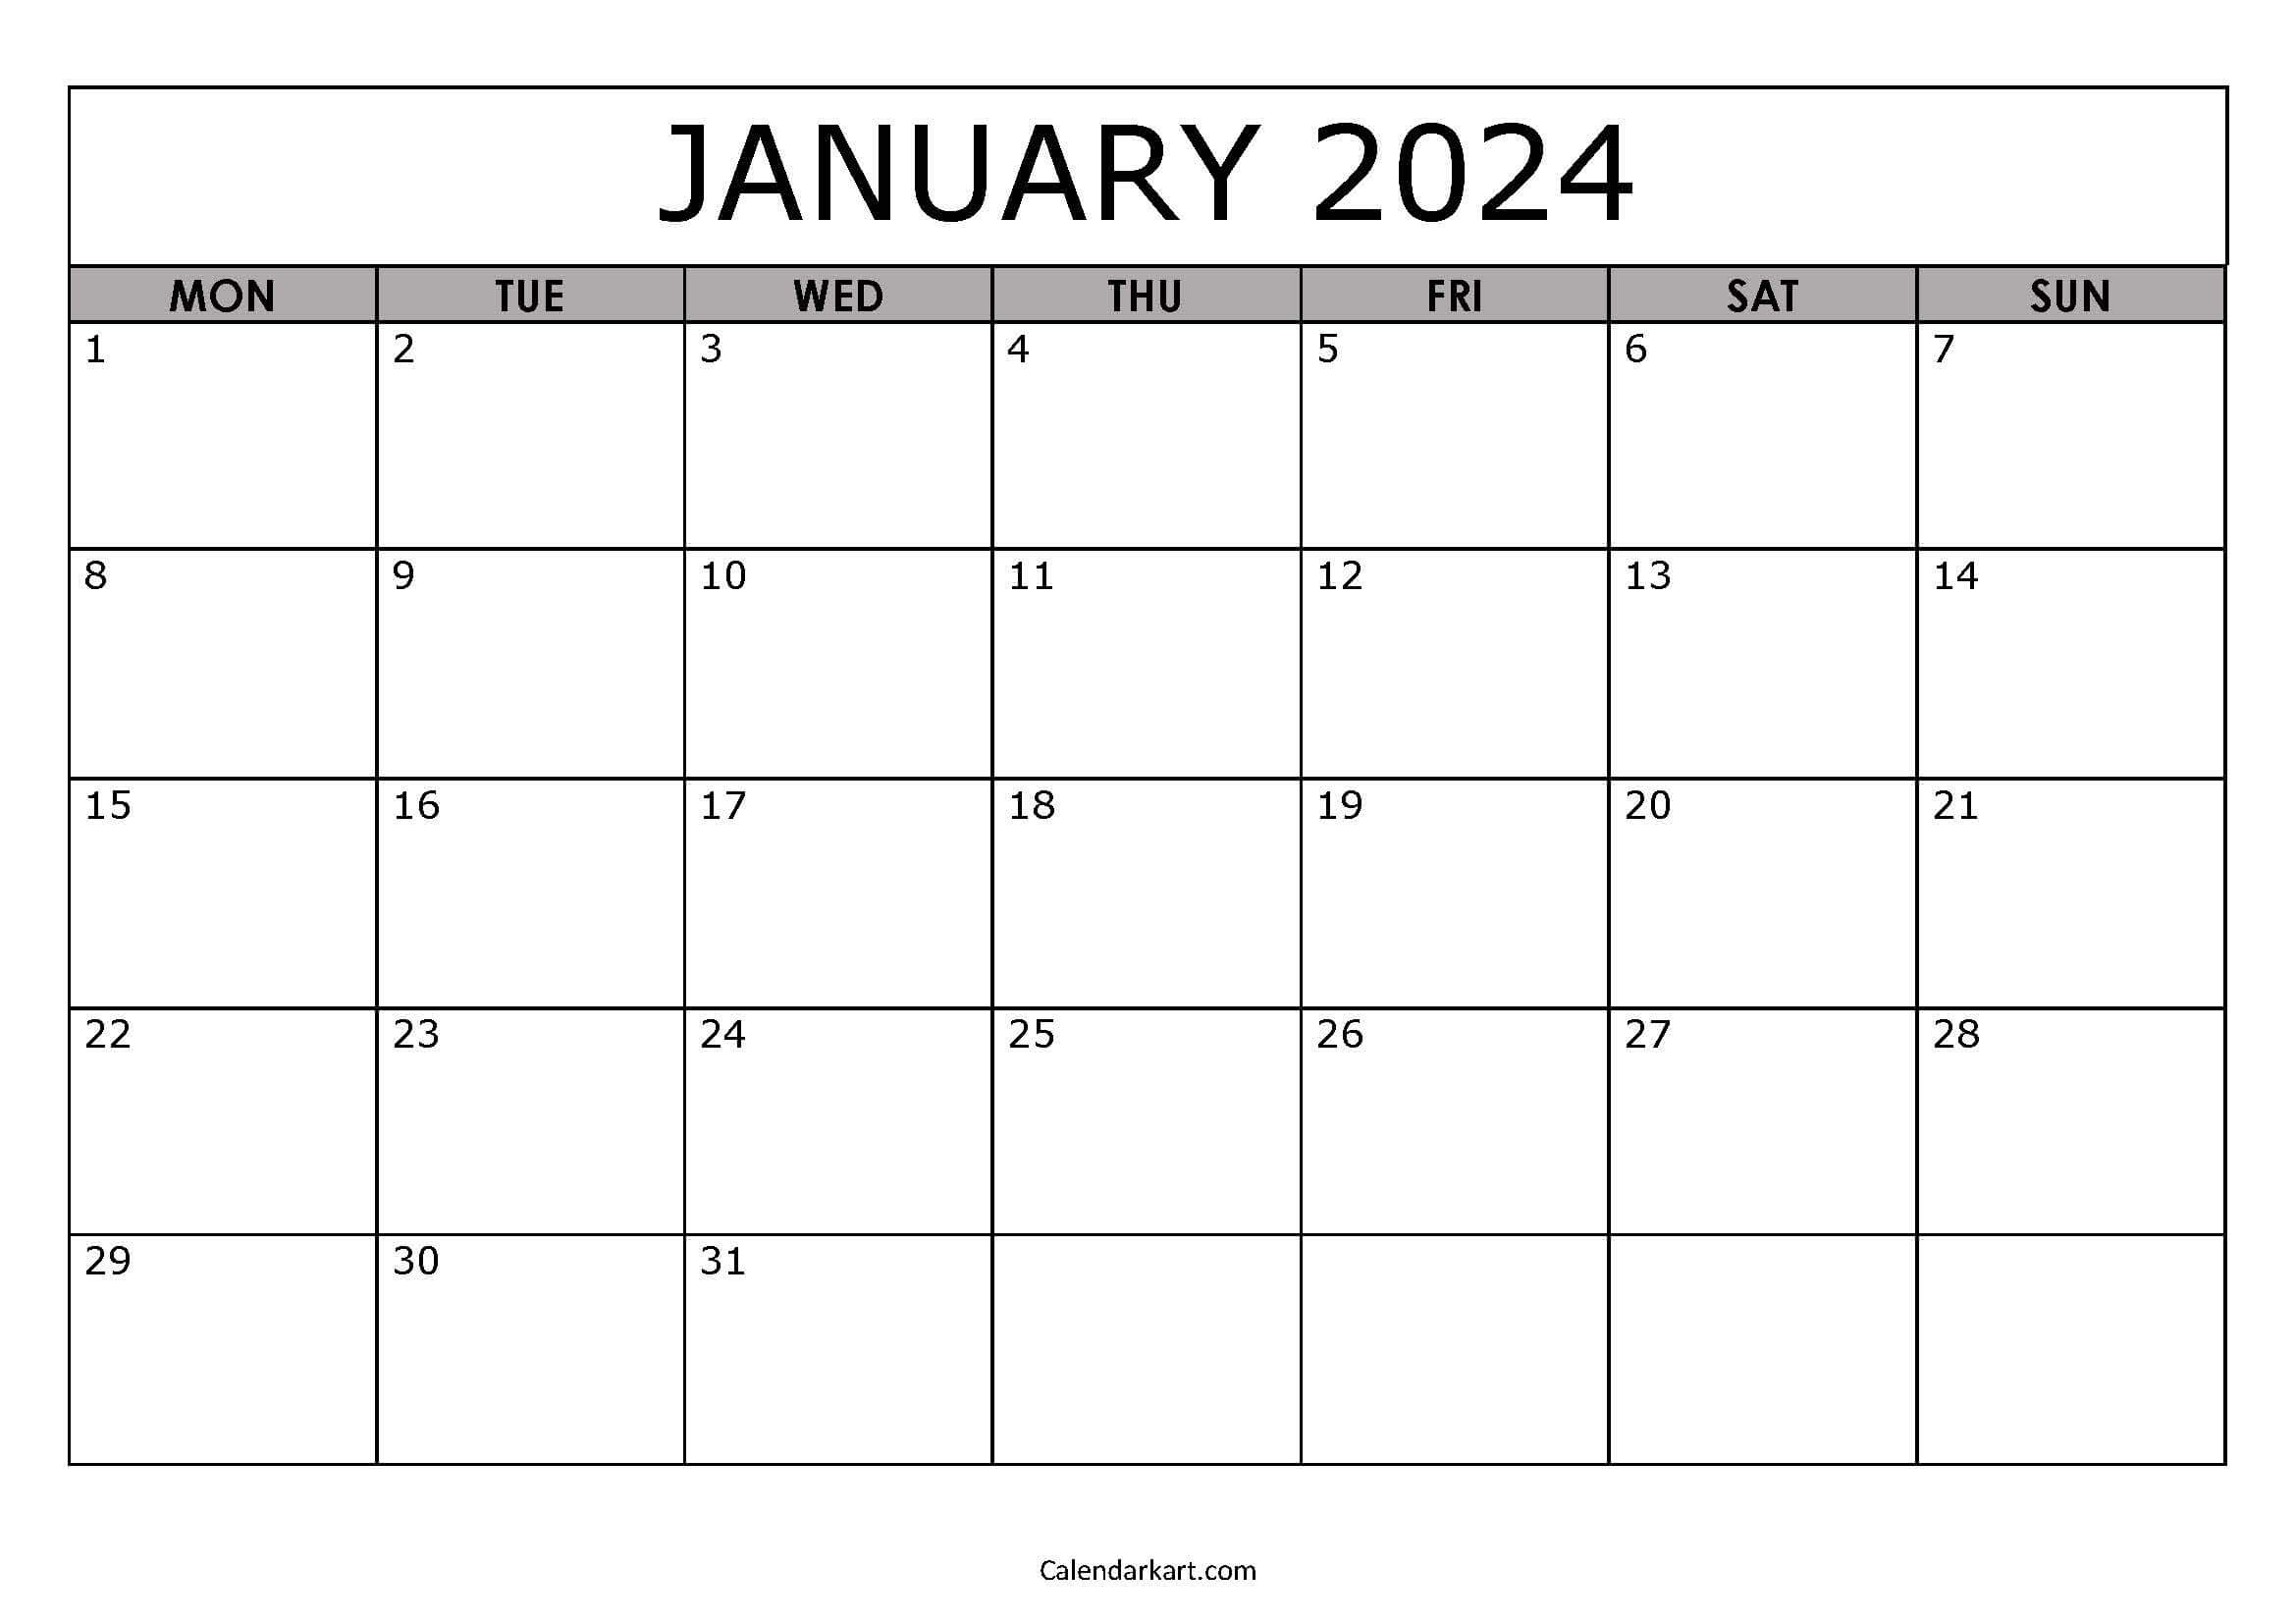 Free Printable January 2024 Calendars - Calendarkart | Printable Calendar 2024 Starting On Monday